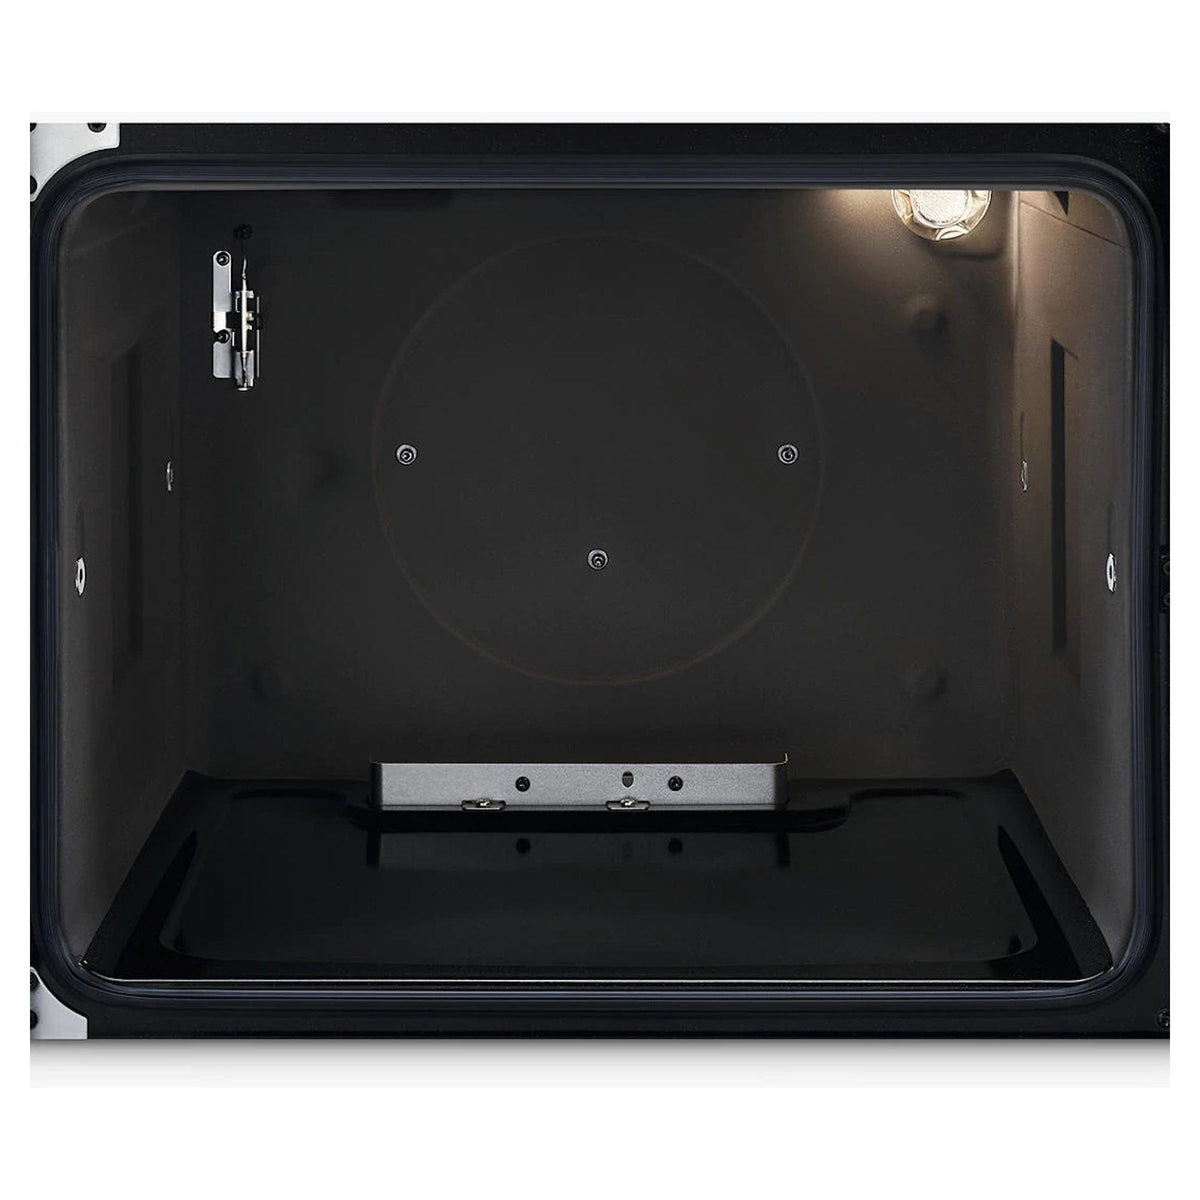 Clearance/Ex-Display Zanussi 60cm Freestanding Gas Cooker - White | ZCG63250WA from DID Electrical - guaranteed Irish, guaranteed quality service. (6890833477820)